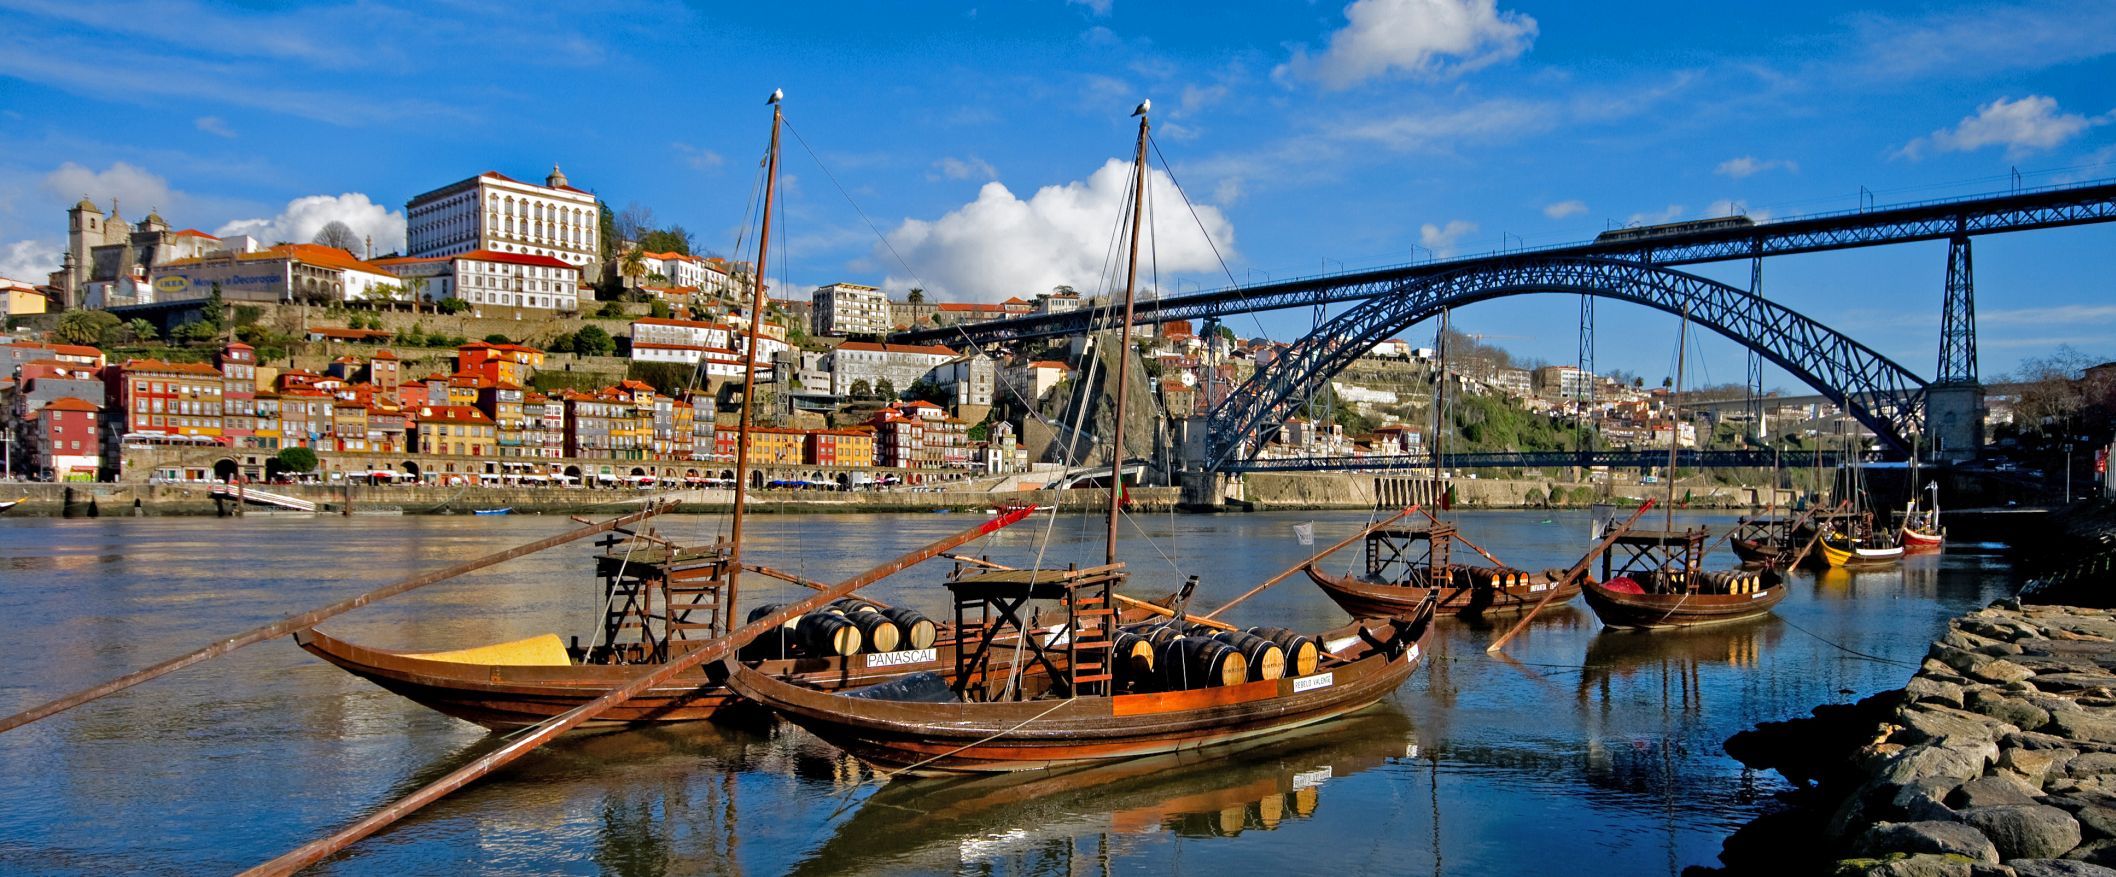  Alte-Weinsegler-in-Porto.jpg 